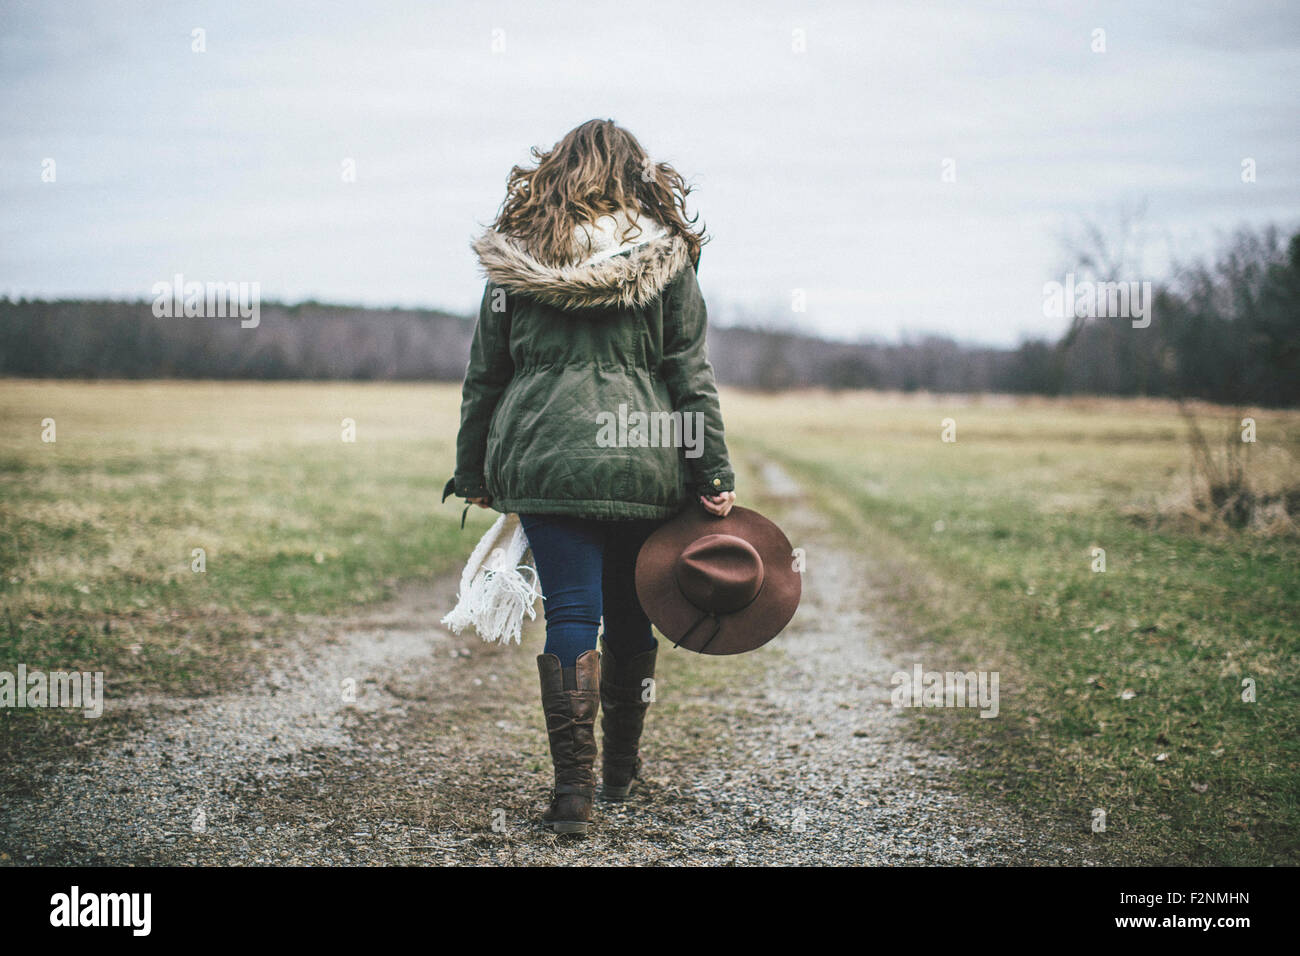 Caucasian woman walking on dirt path in rural field Stock Photo